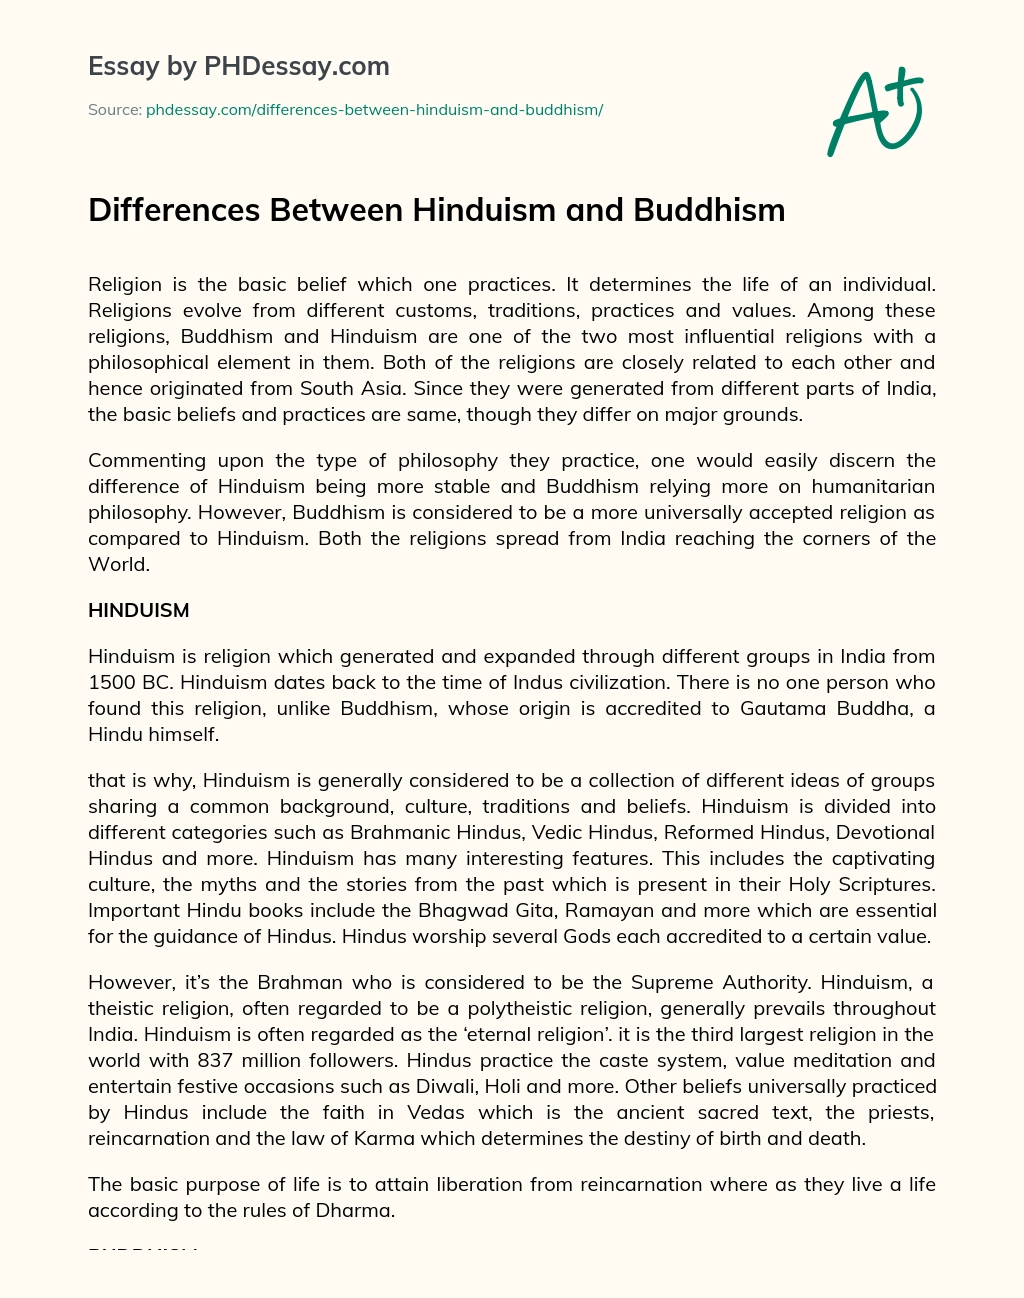 hinduism essay